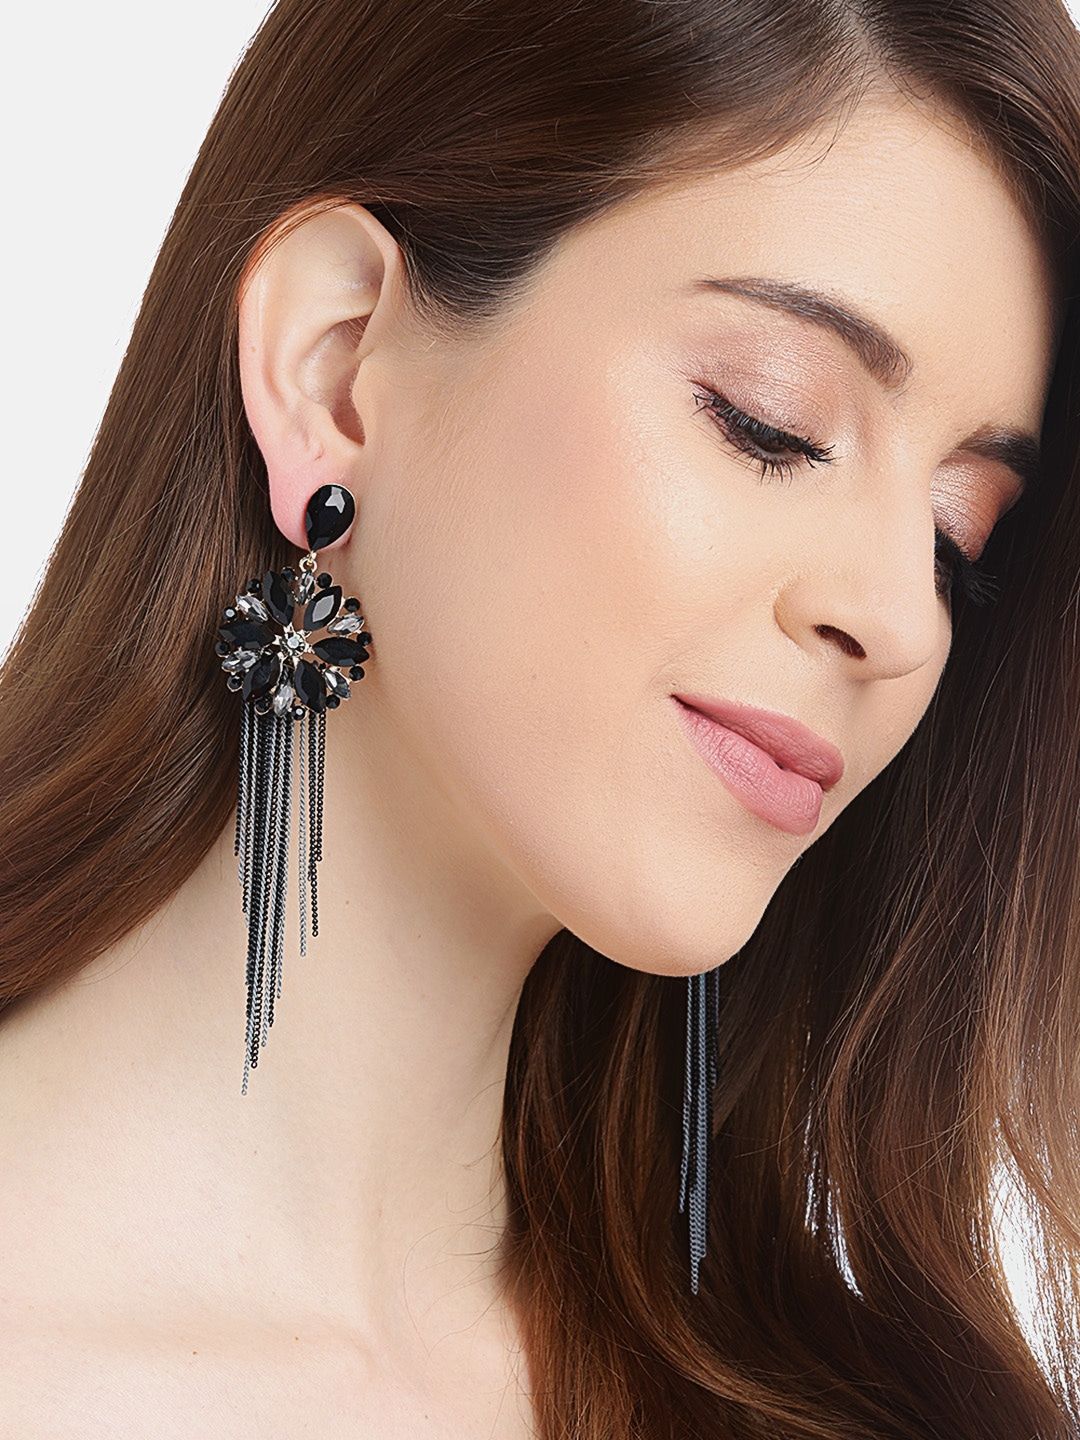 Buy JSAJ Sterling Silver Tops Hanging Womens Earrings BLACK STONE (BLACK)  at Amazon.in